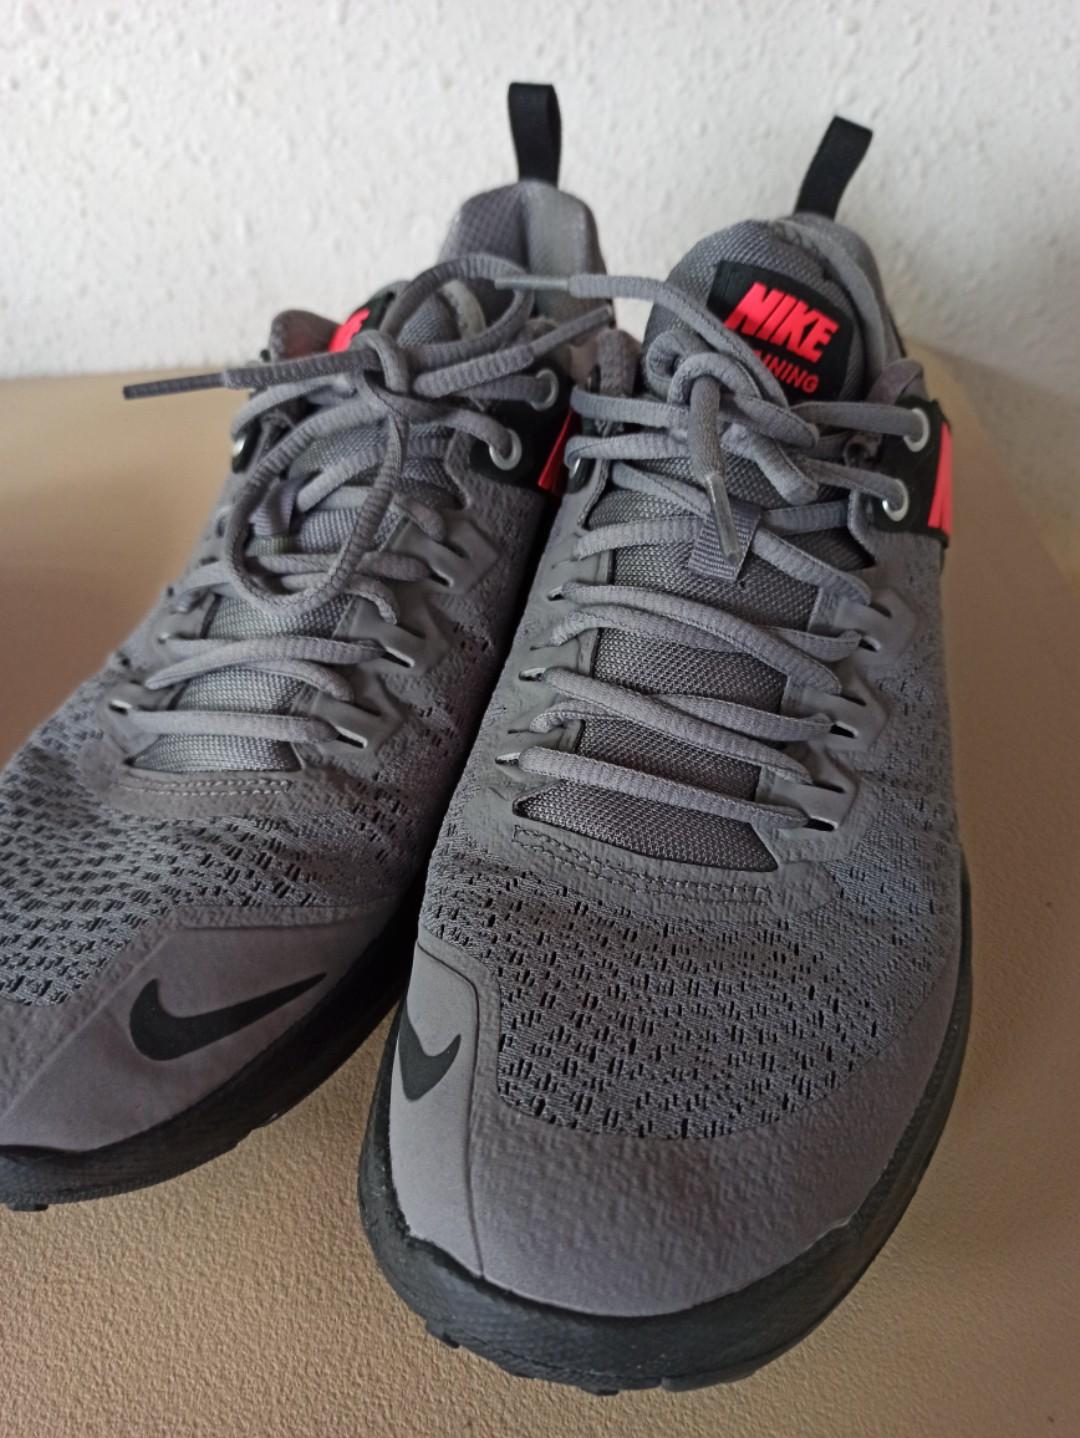 nike training shoes gray